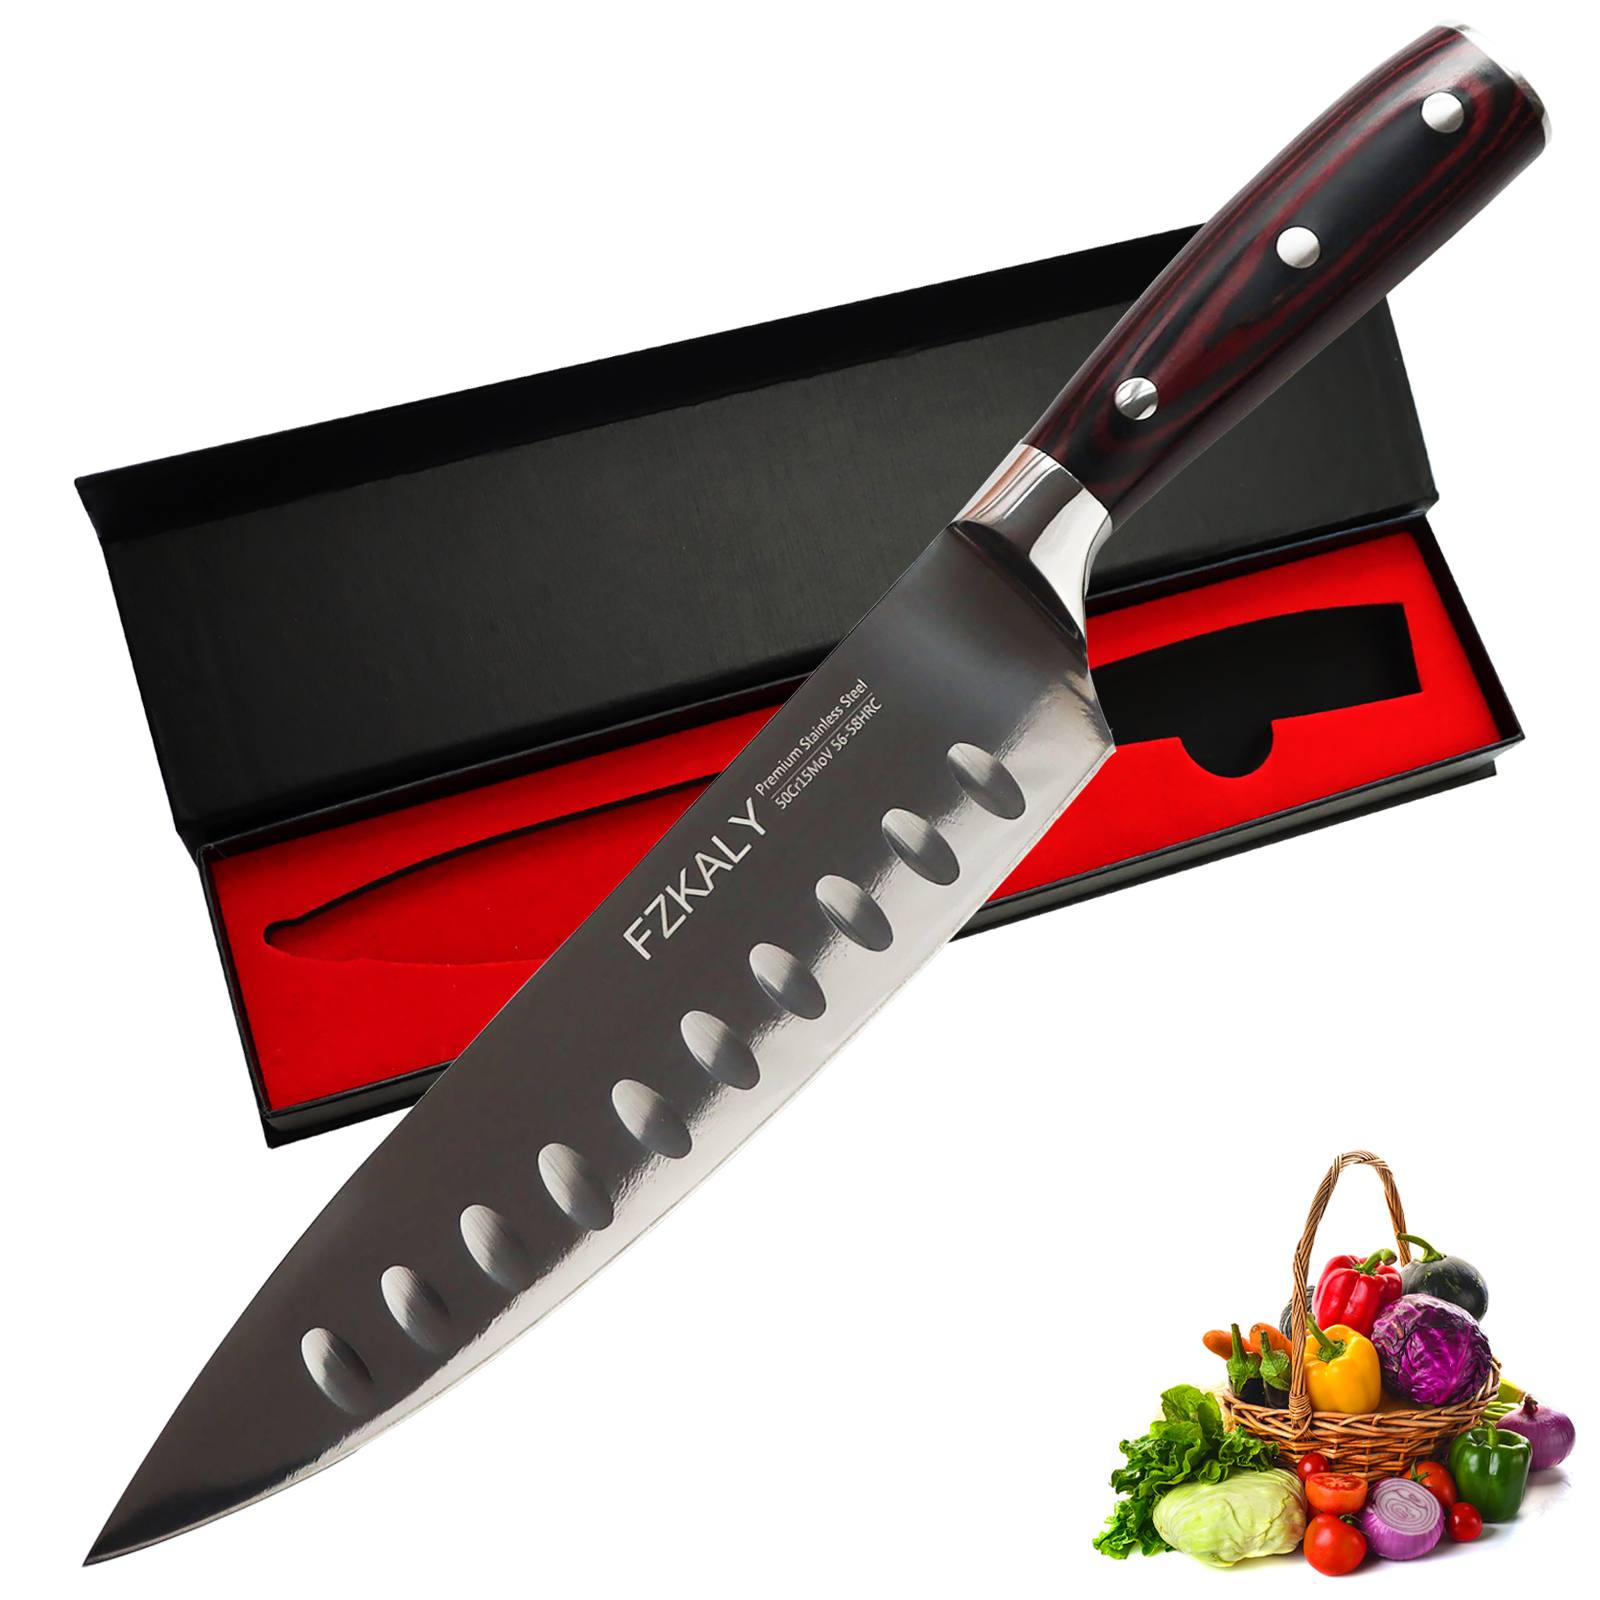 https://img-va.myshopline.com/image/store/1648111340947/8-inch-chefs-knife.jpeg?w=1600&h=1600